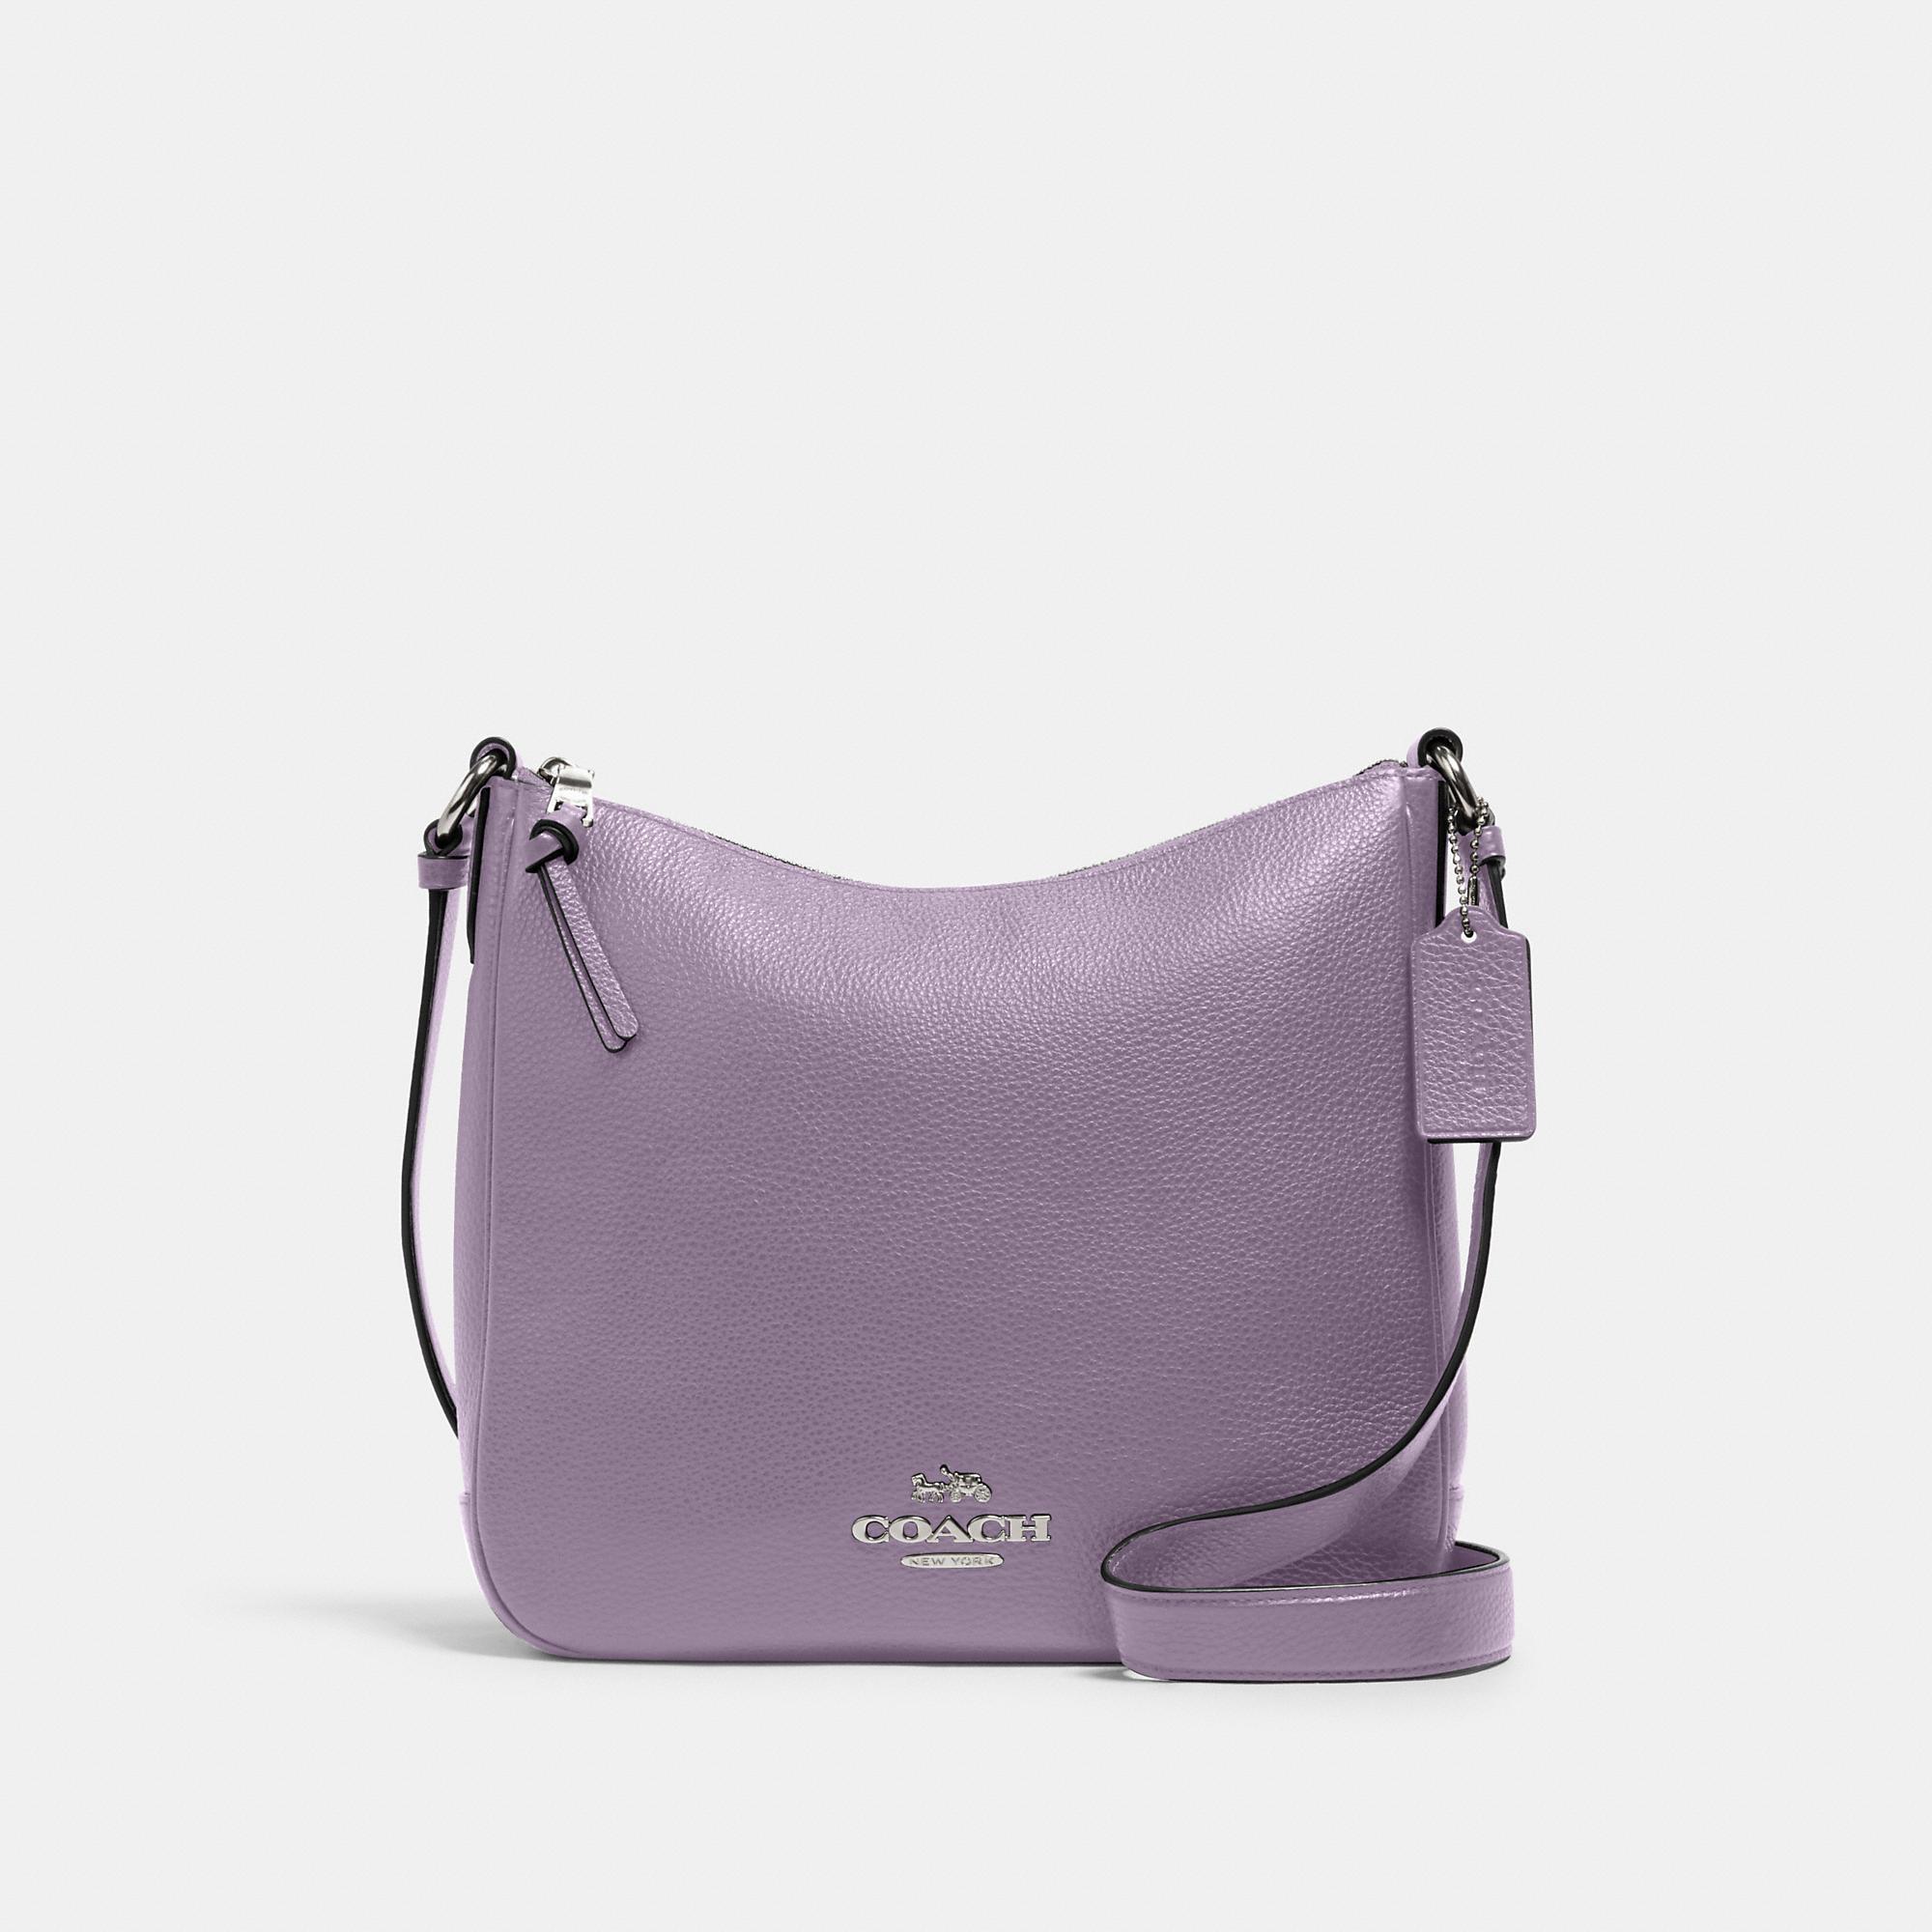 COACH Leather Ellie File Bag in sv/Vintage Purple (Purple) - Lyst